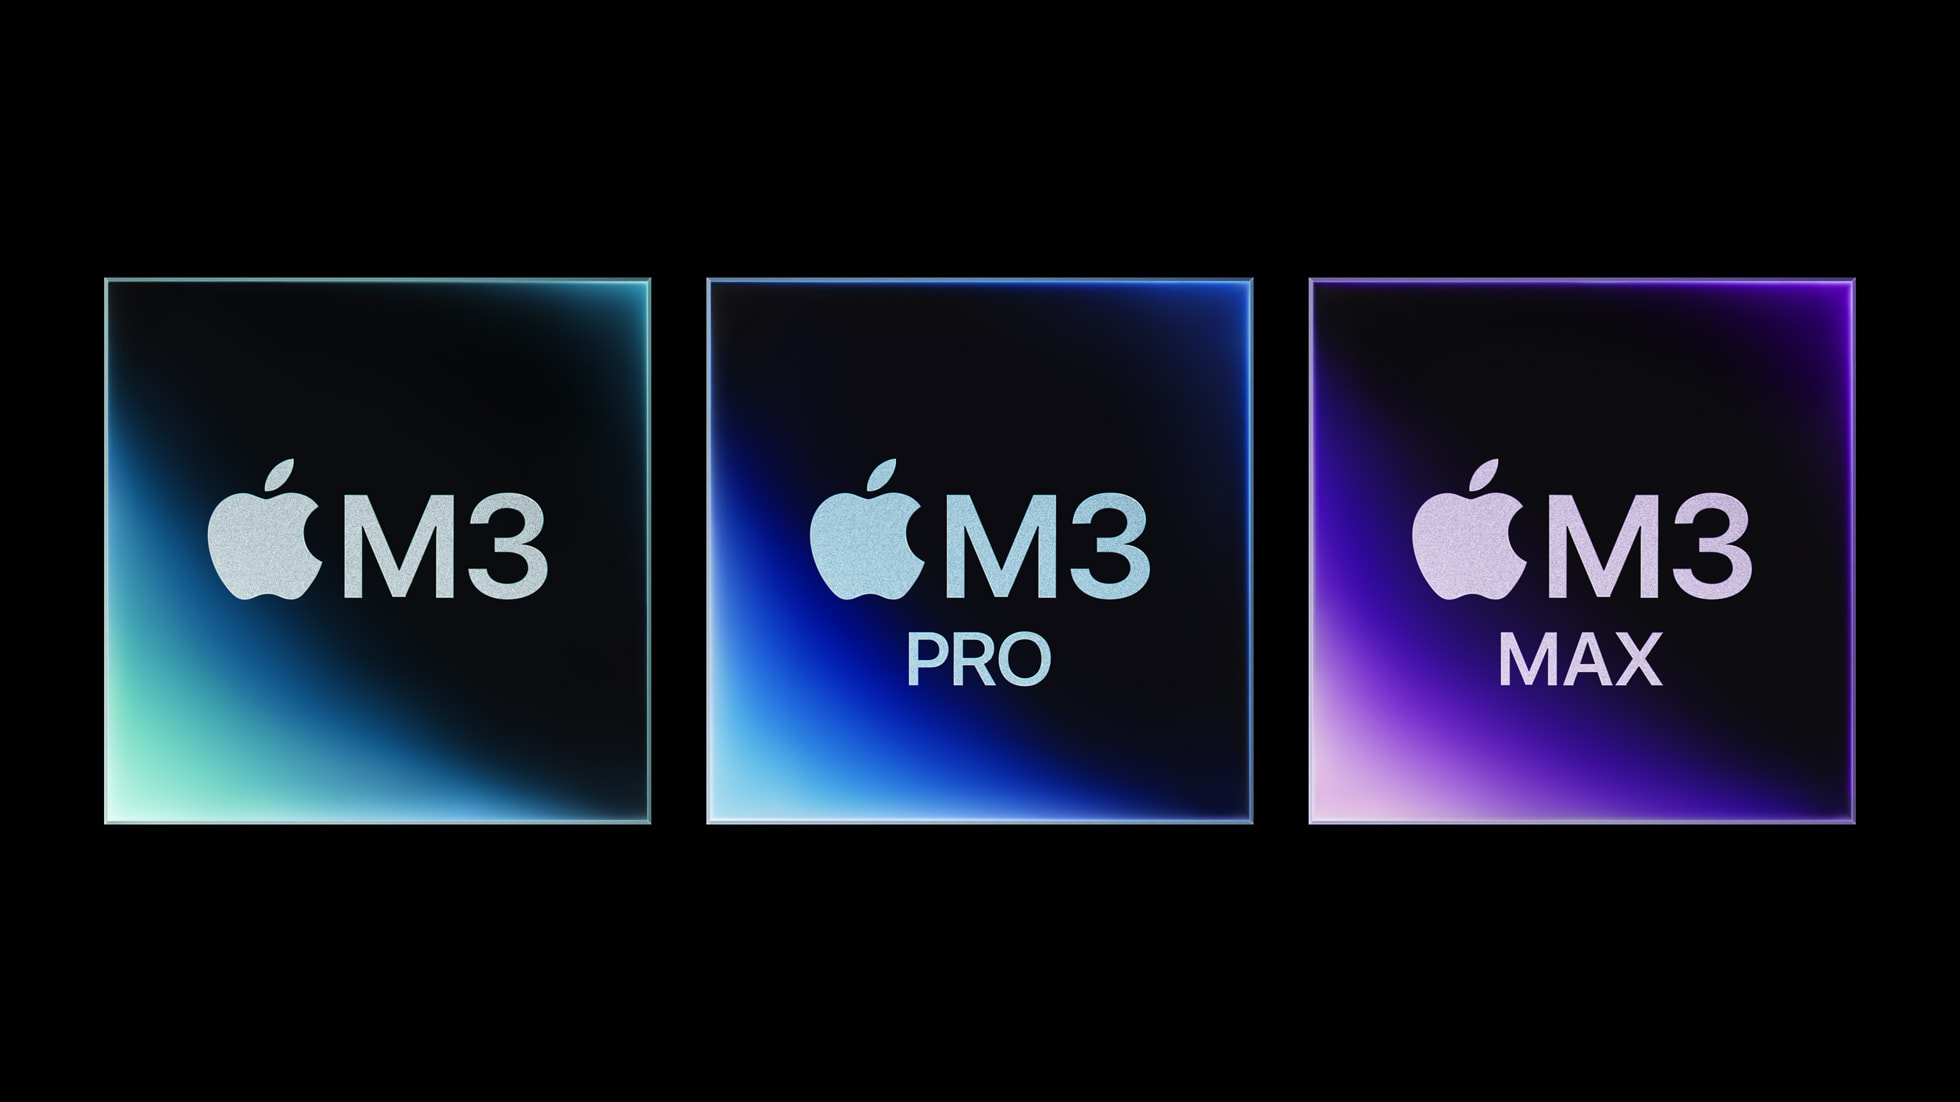 Apple-M3-chip-series-231030_big.jpg.large_2x (1)